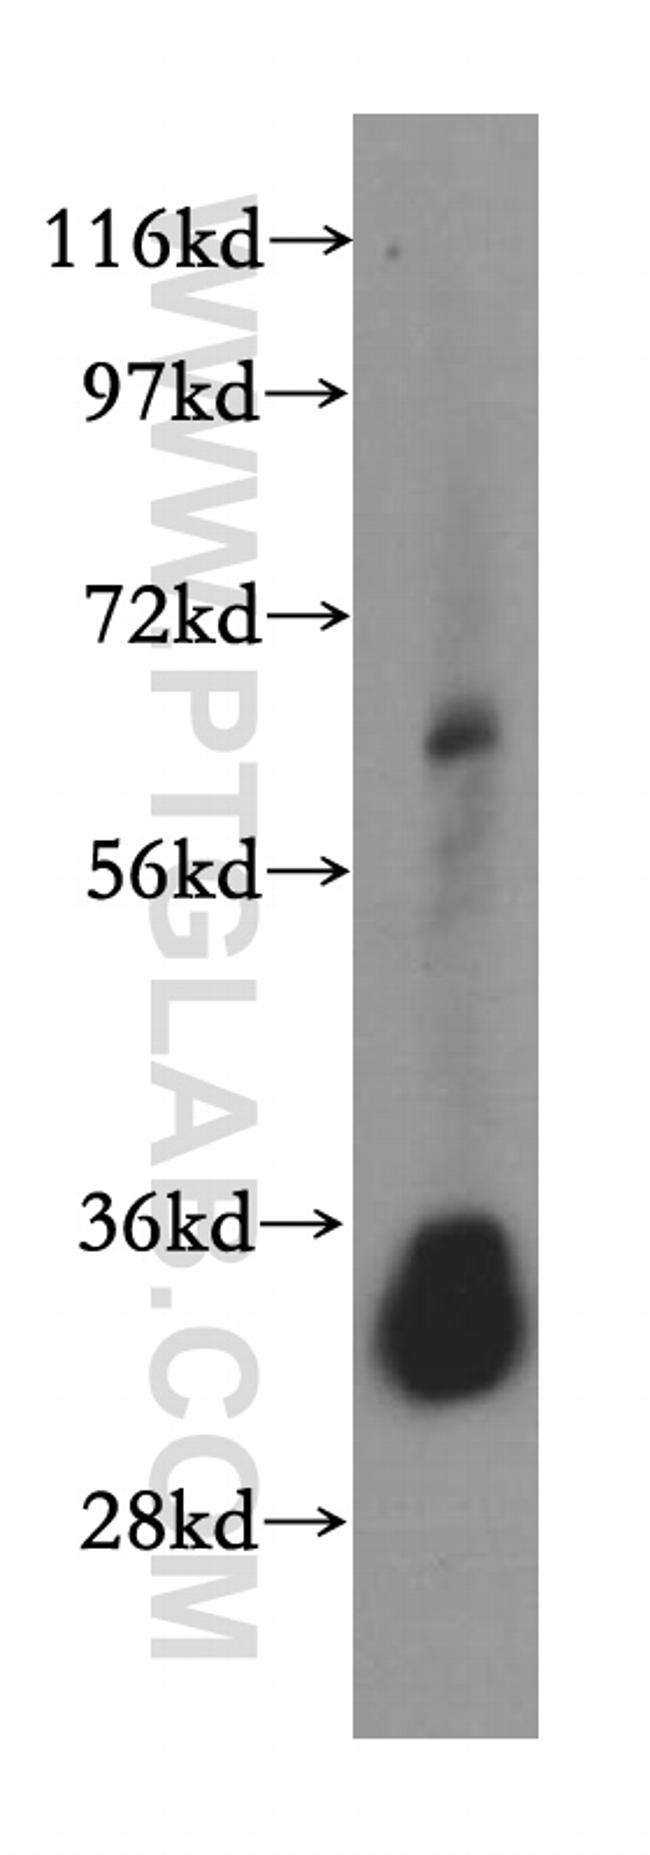 VAPA Antibody in Western Blot (WB)